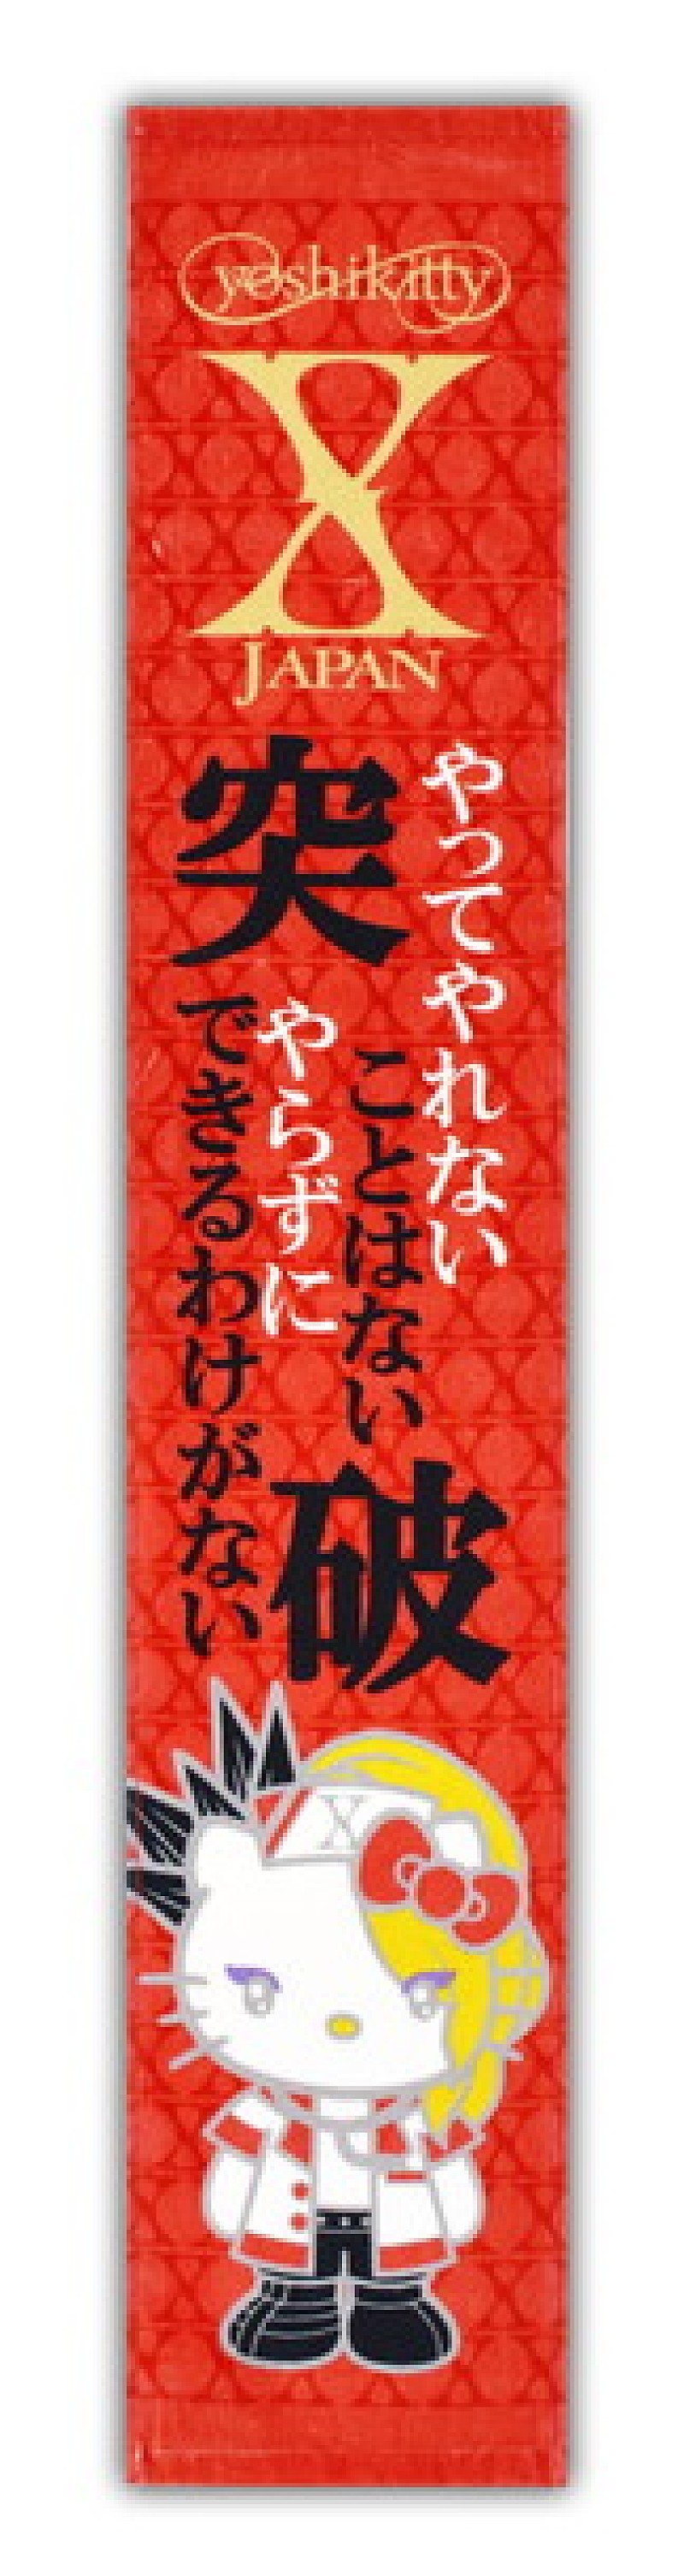 Yoshikiの名言を刻んだ Yoshikitty 名言スポーツタオル 登場 サンリオキャラクター大賞 エントリー中 Daily News Billboard Japan